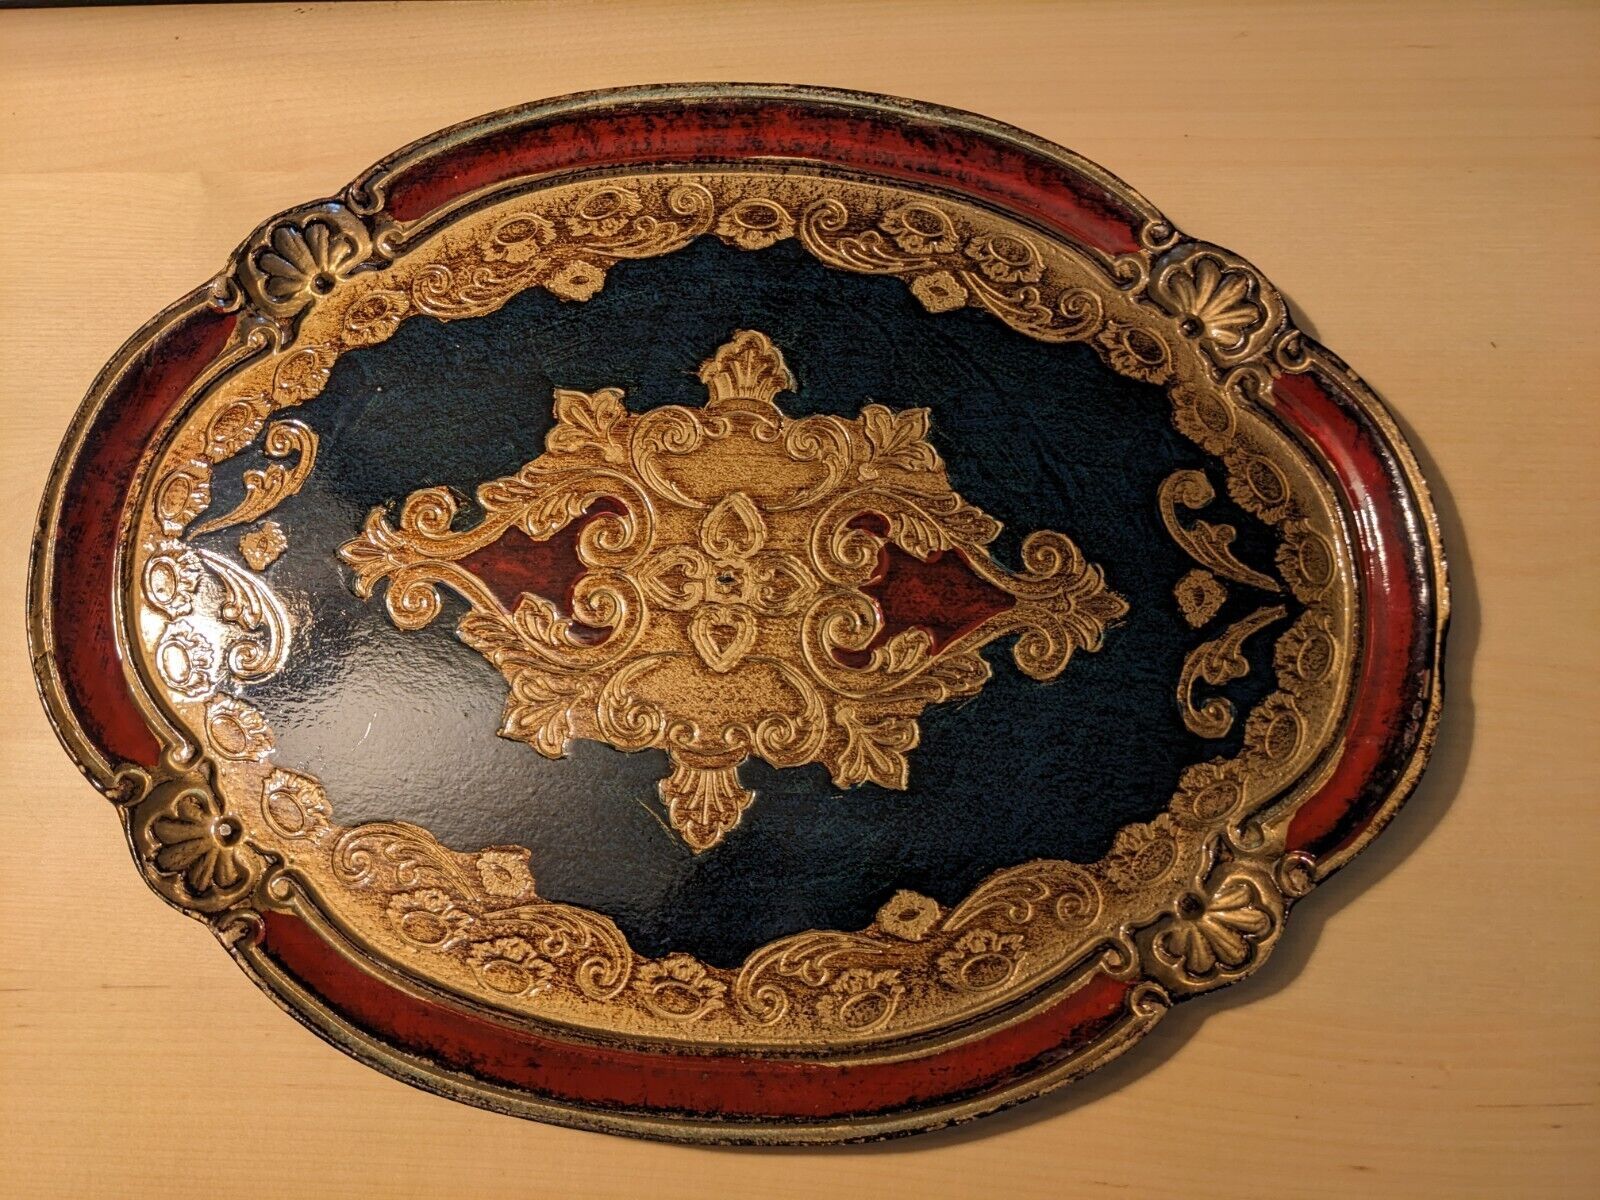  Handmade original Italian wood oval tray.